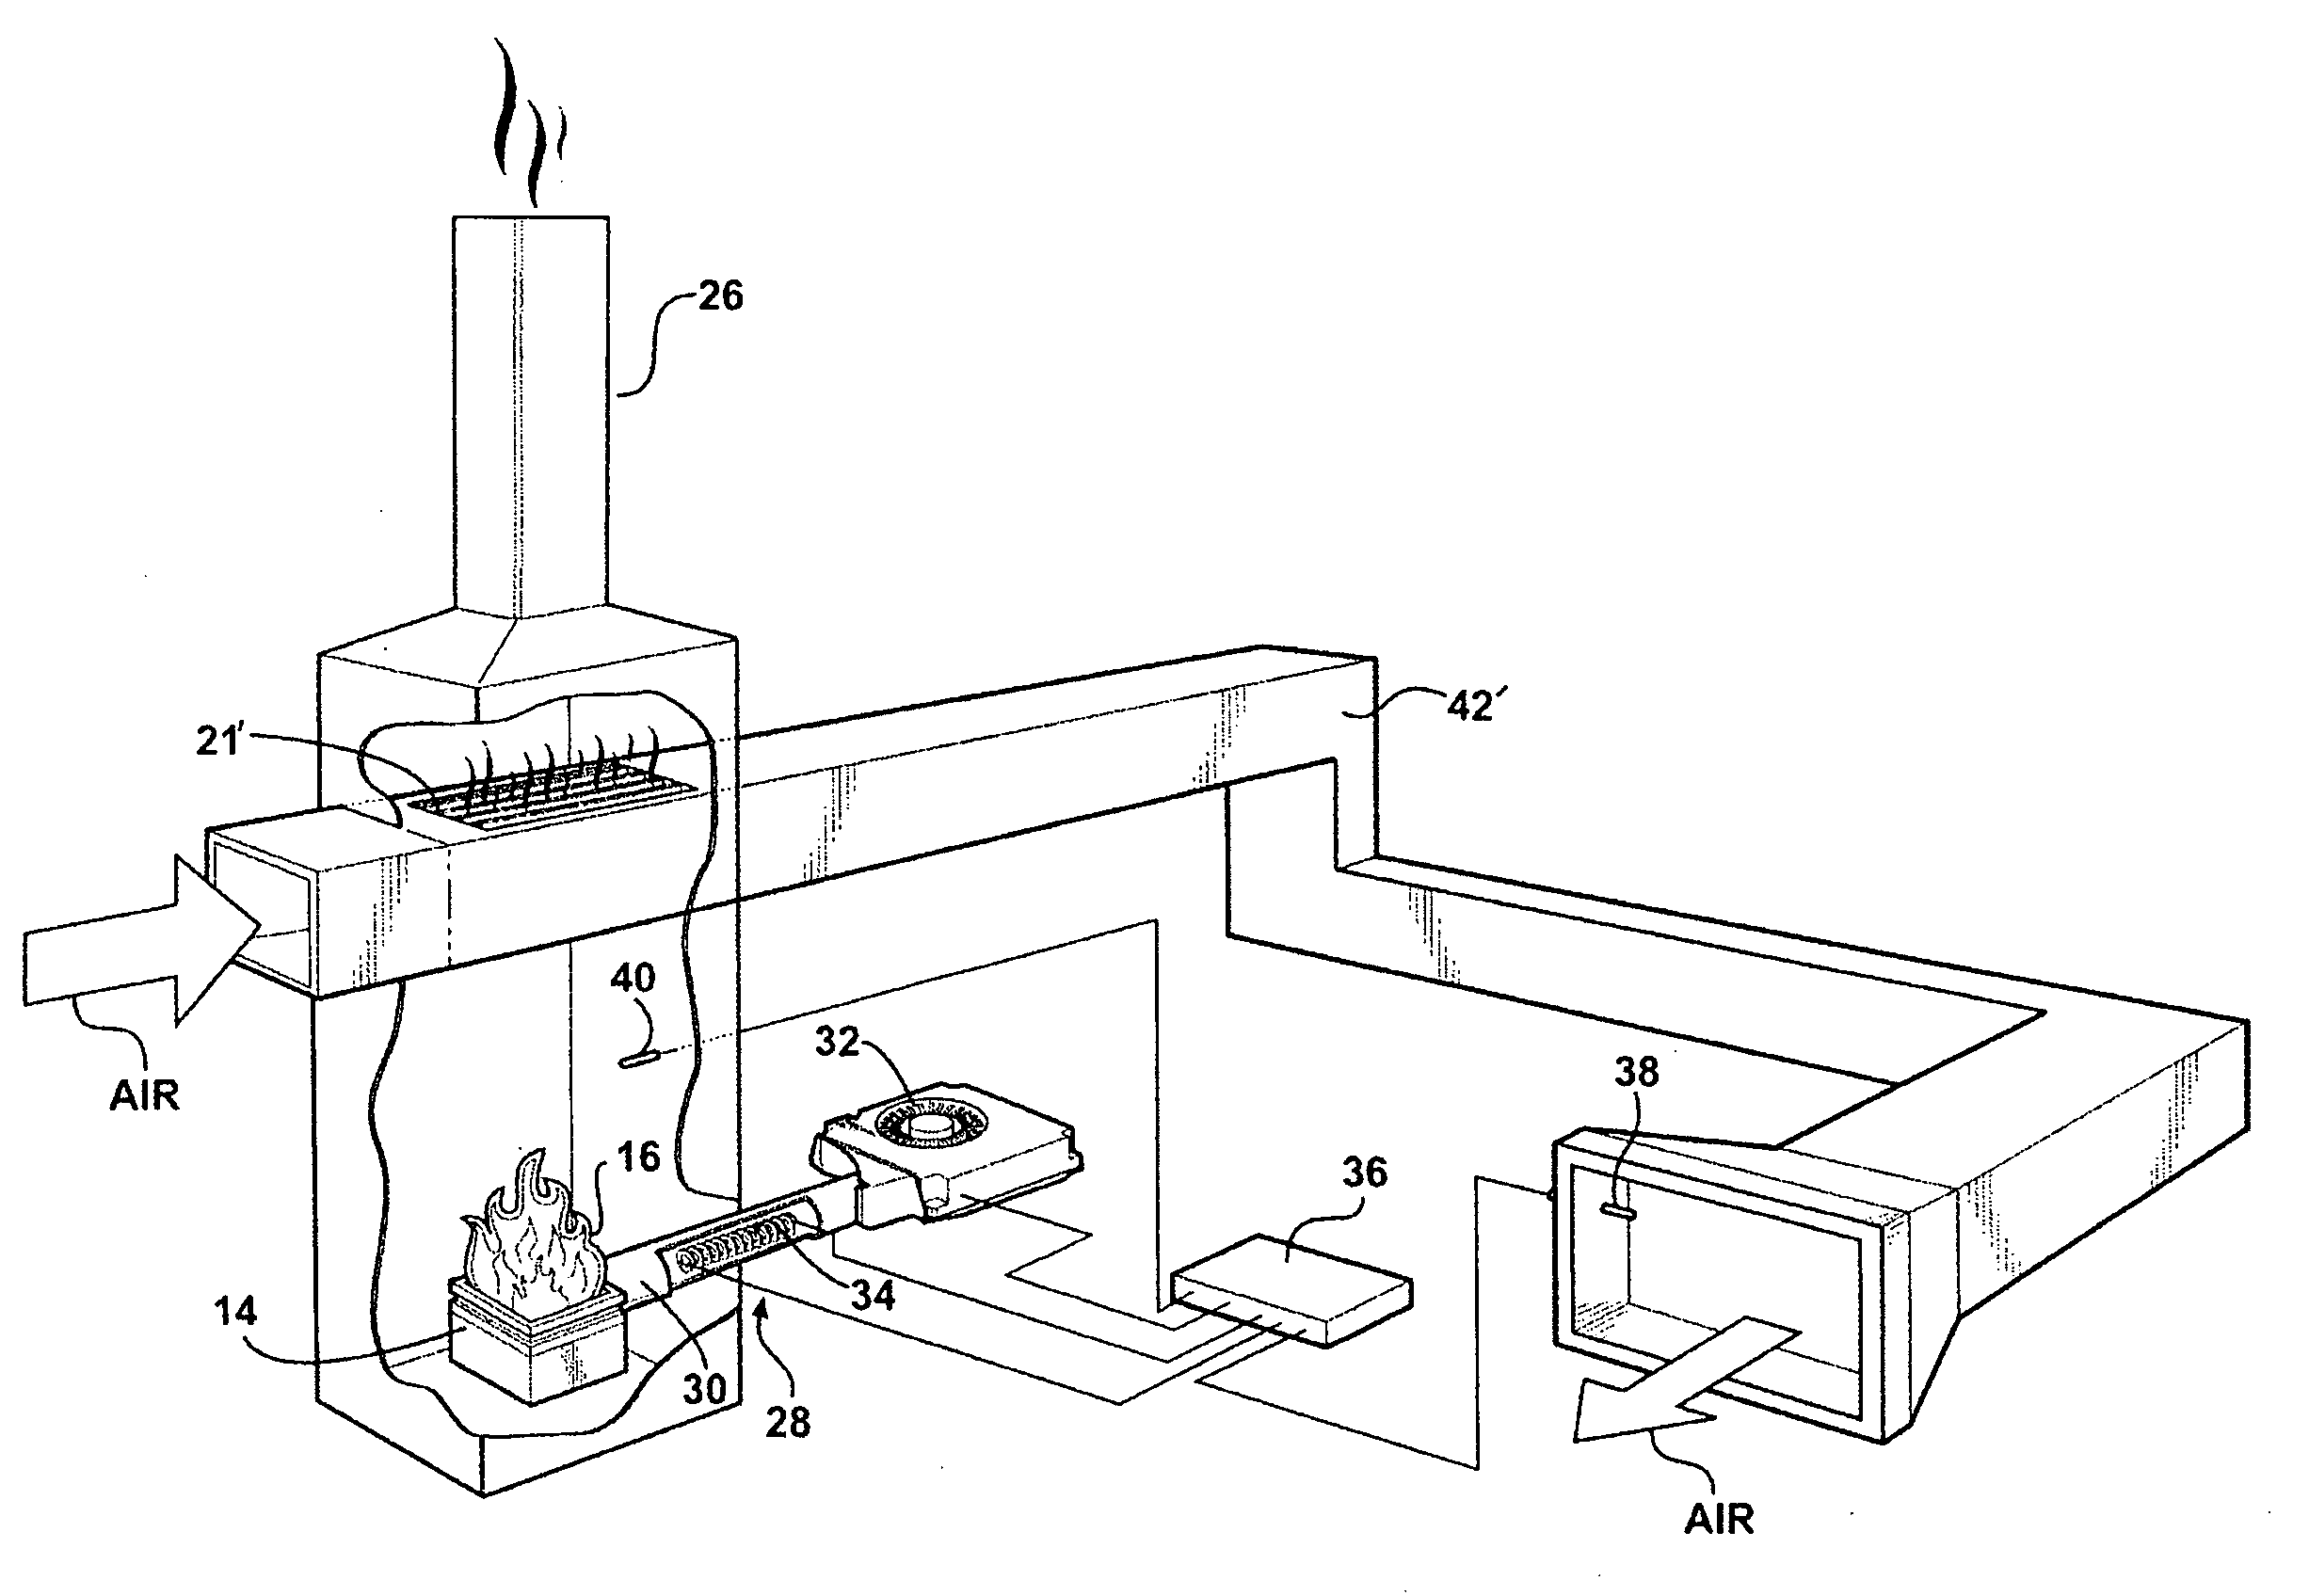 Auto-igniter for biomass furnace